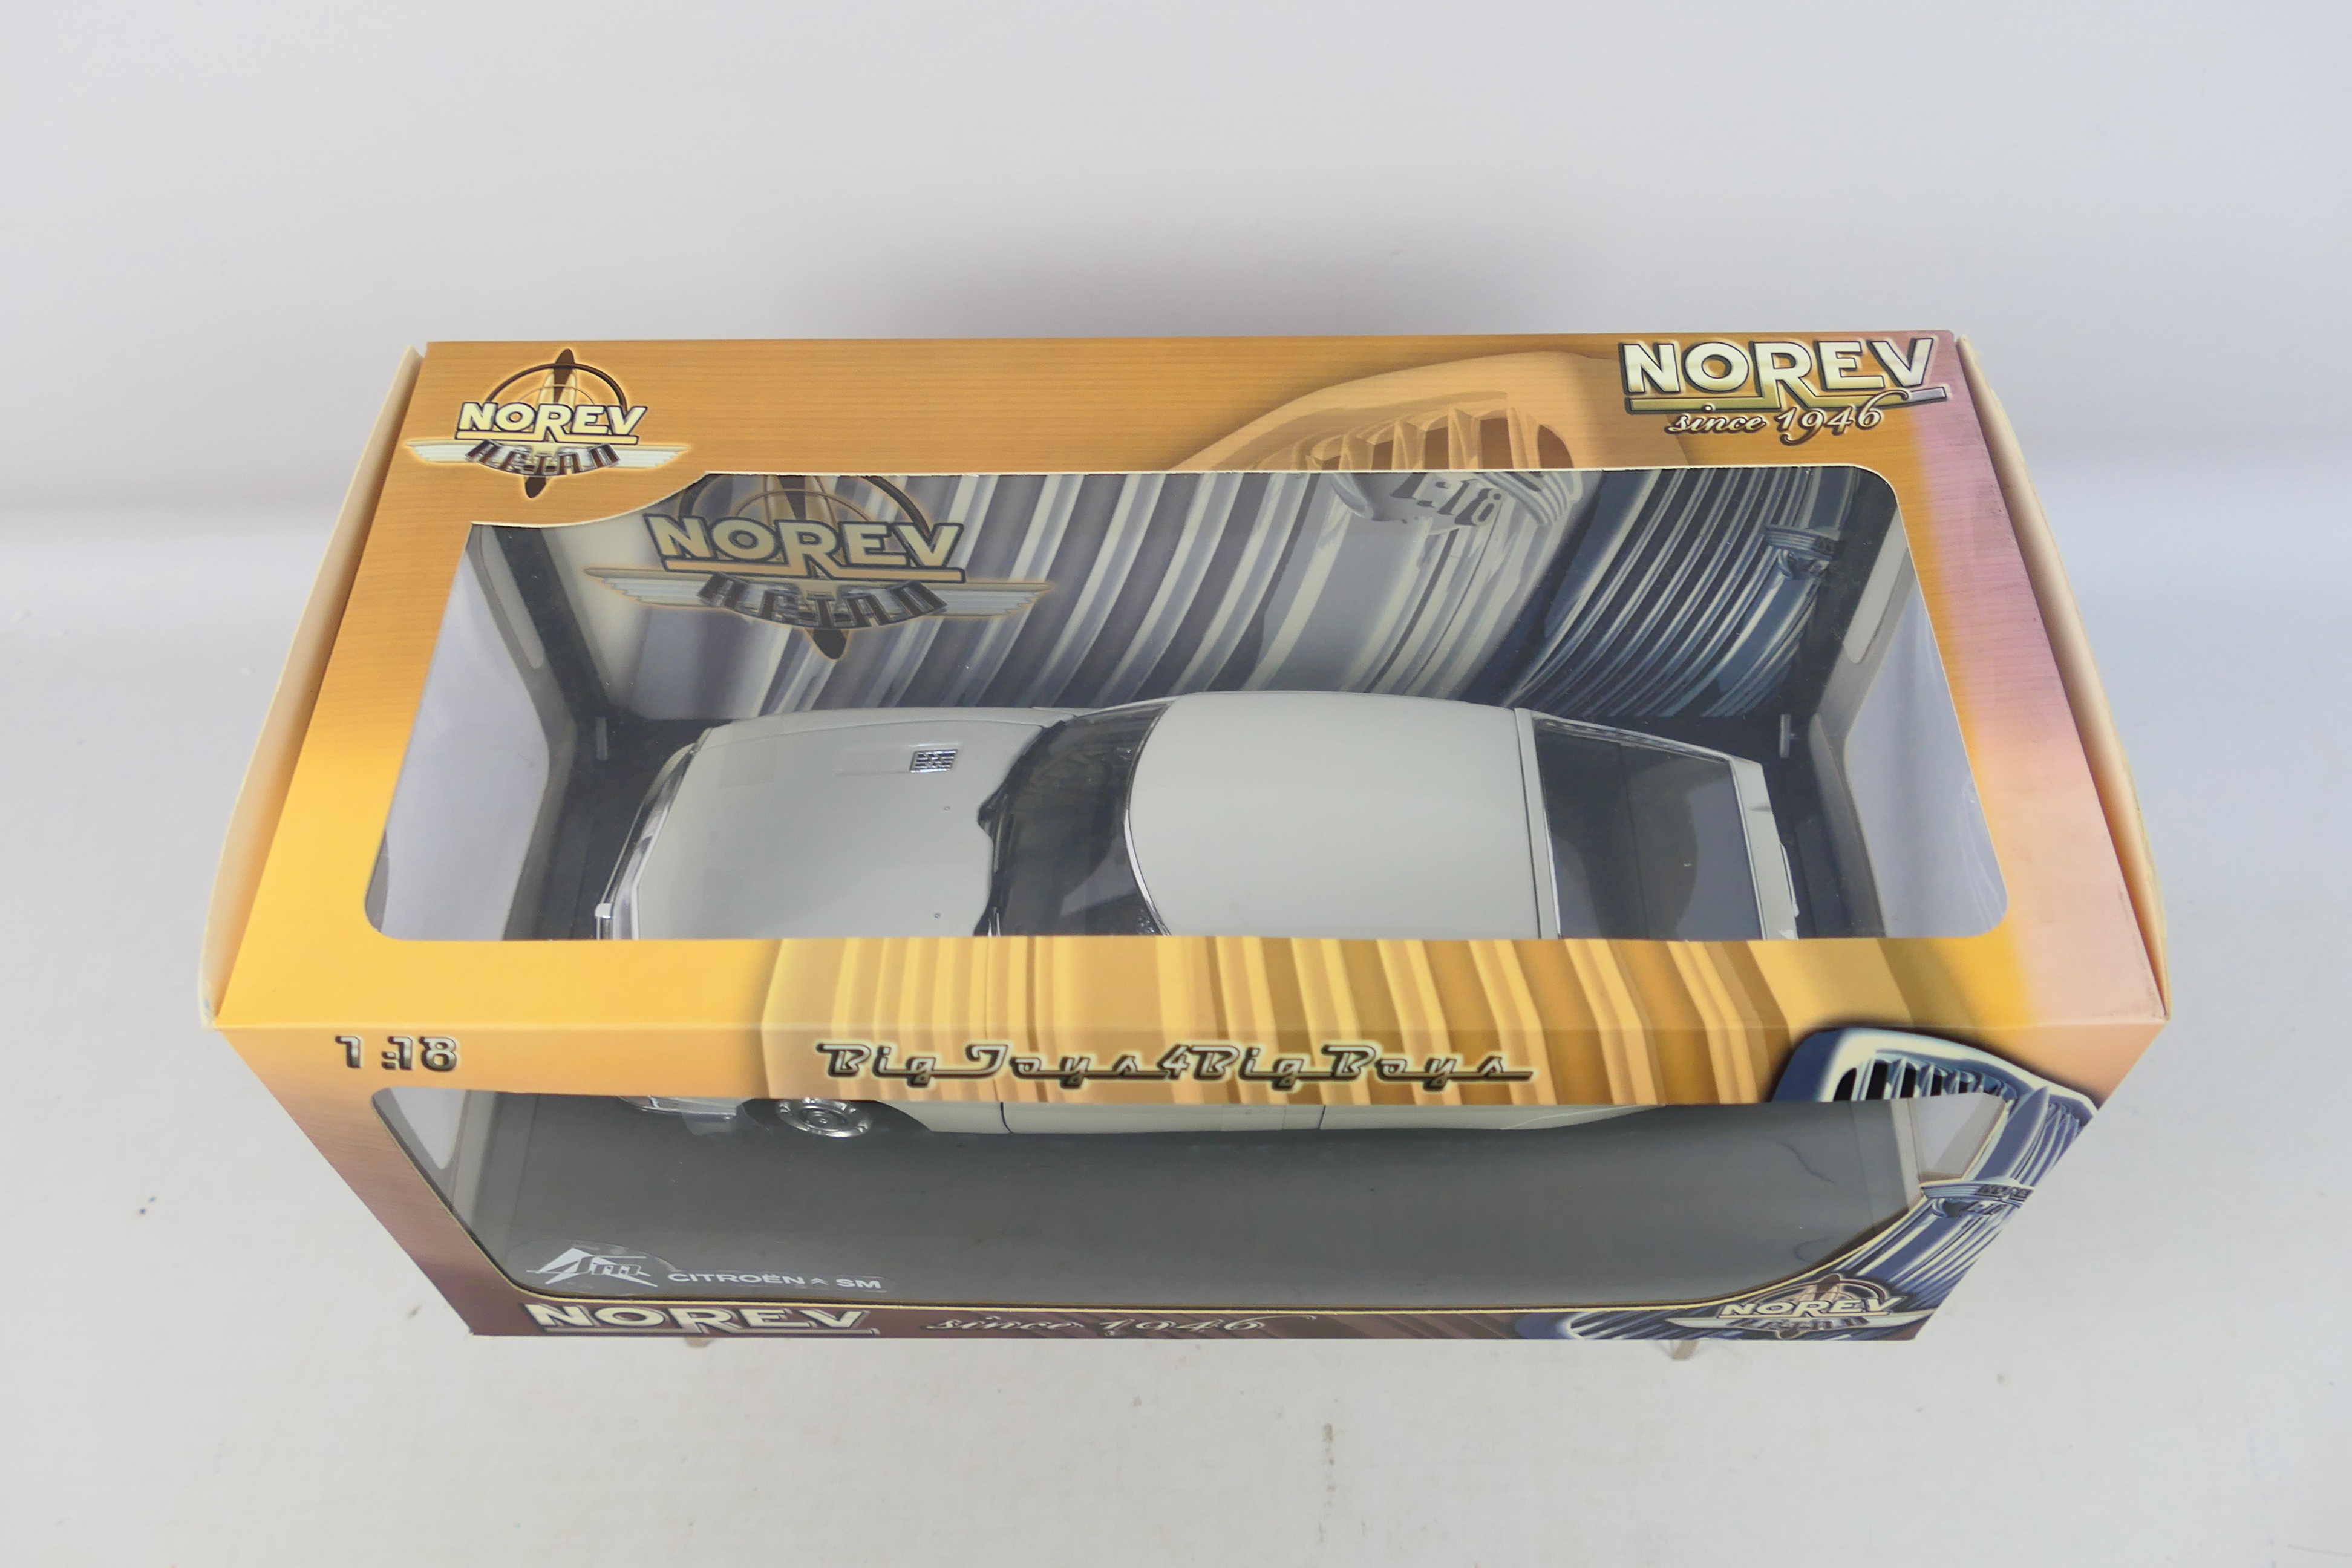 Norev - A boxed Norev #181584 1:18 scale Citroen SM. - Bild 2 aus 2